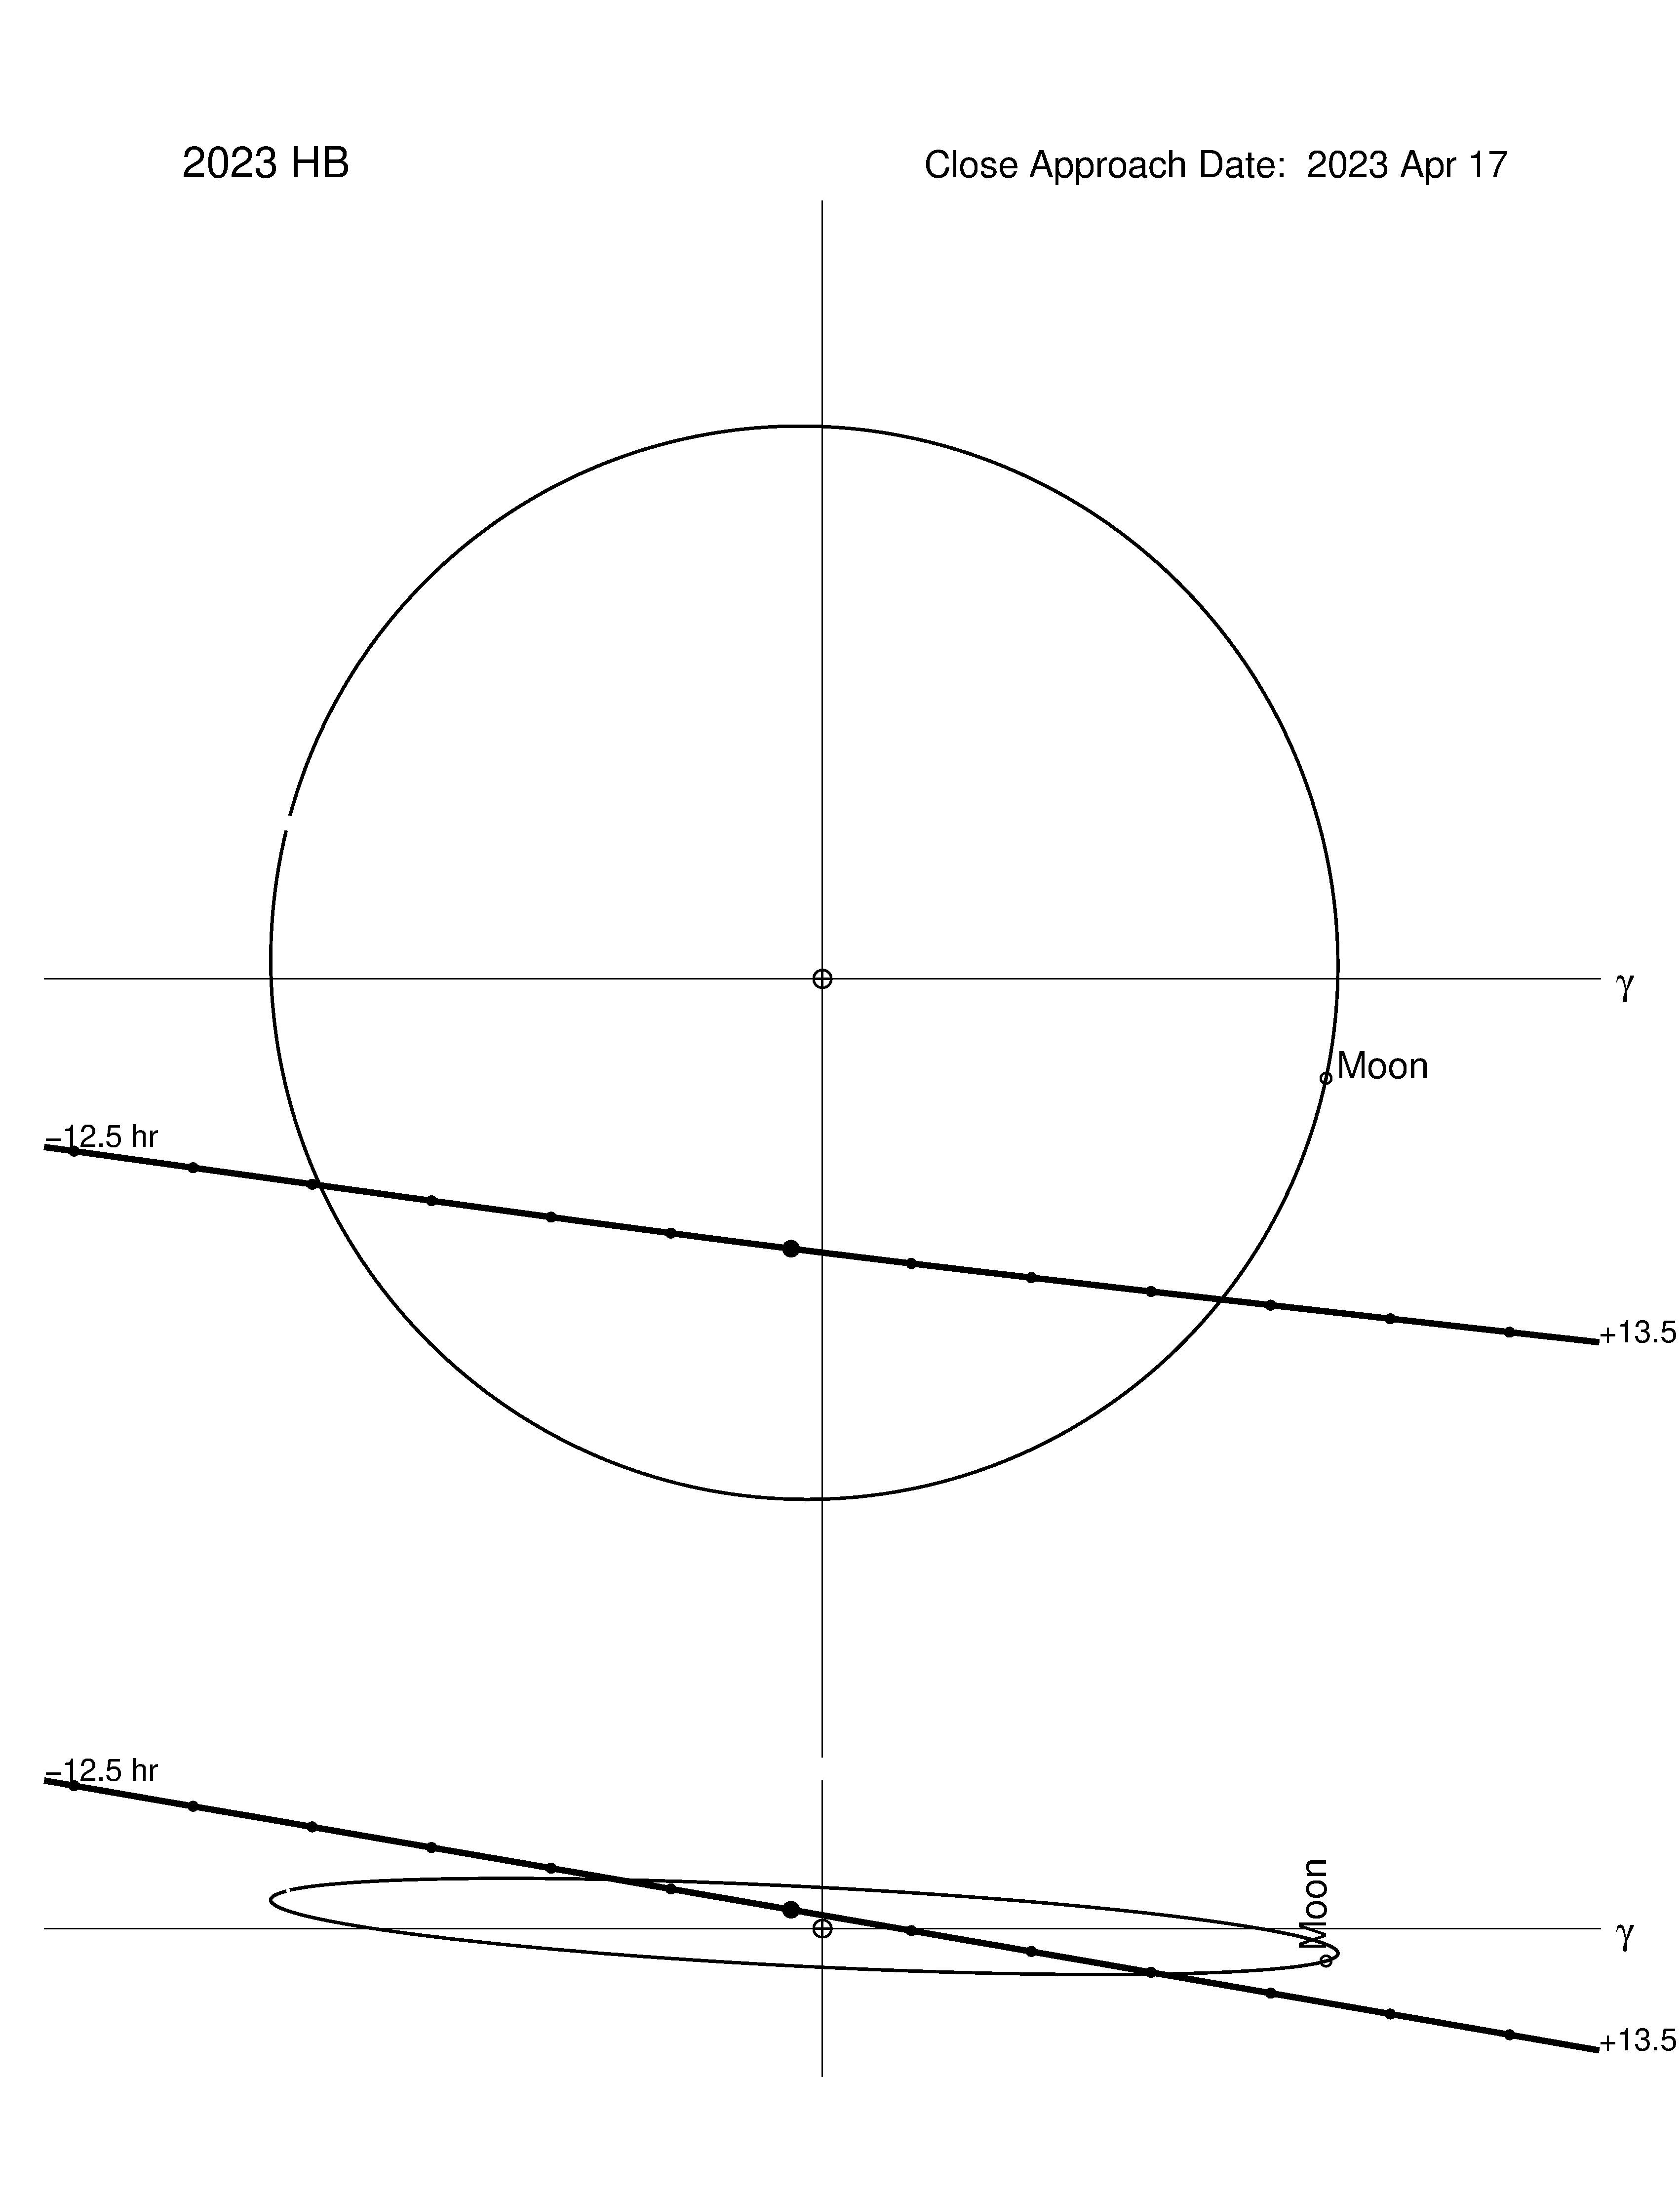 Near-Earth trajectory of 2023 HB